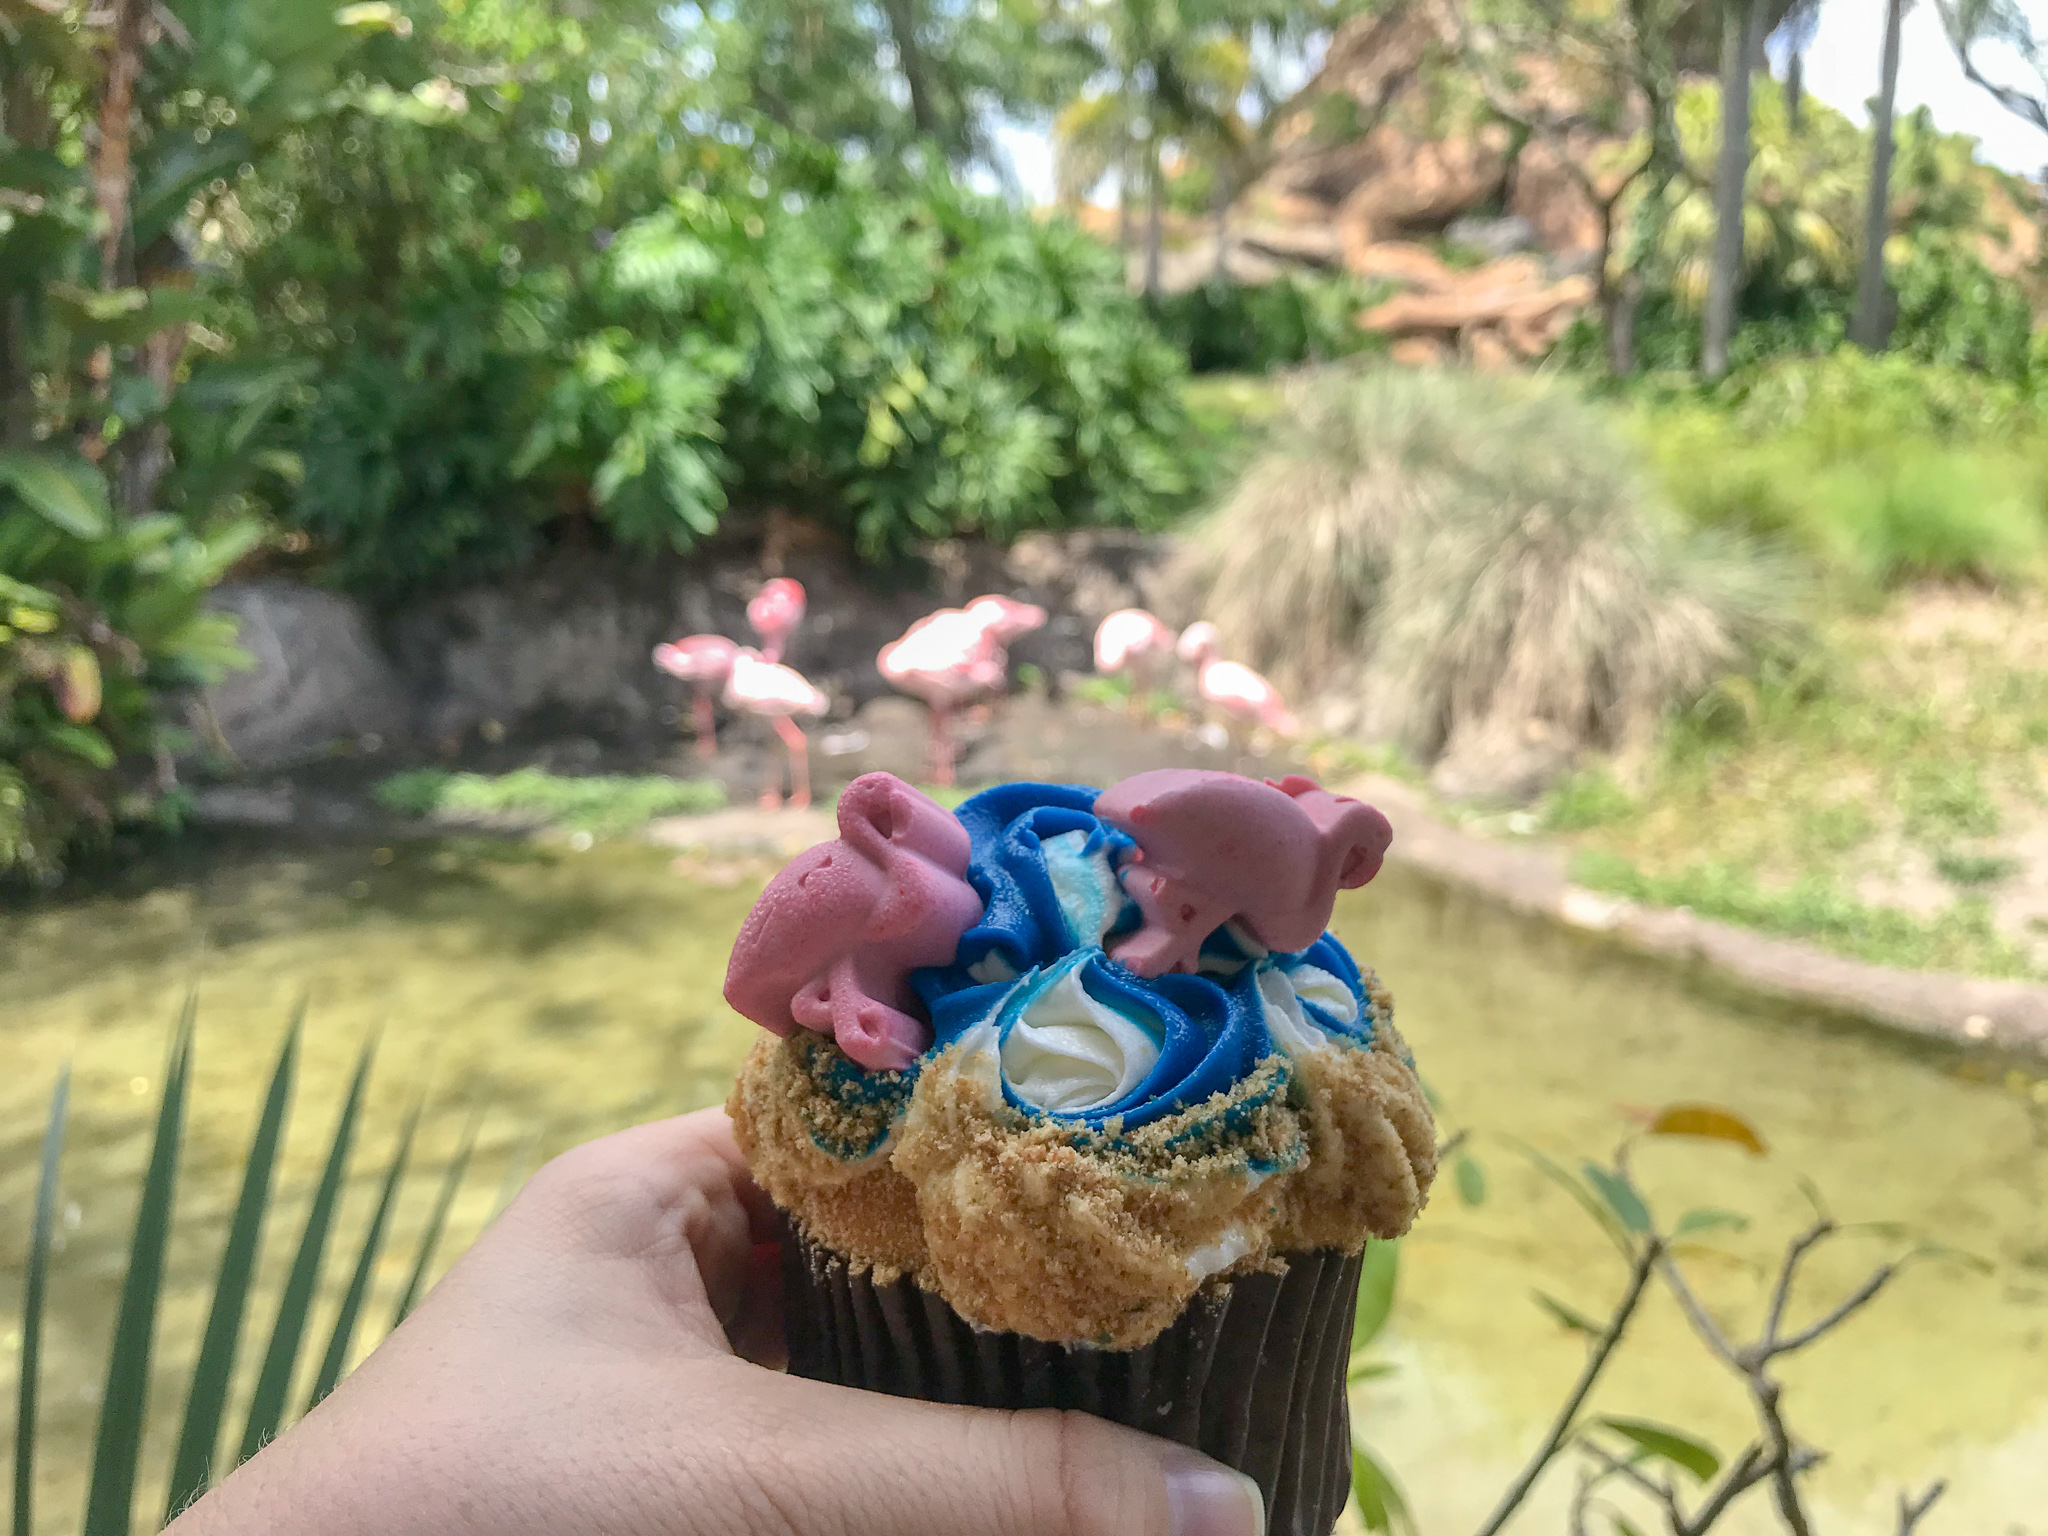 Flamingo Cupcake Makes Debut At Animal Kingdom